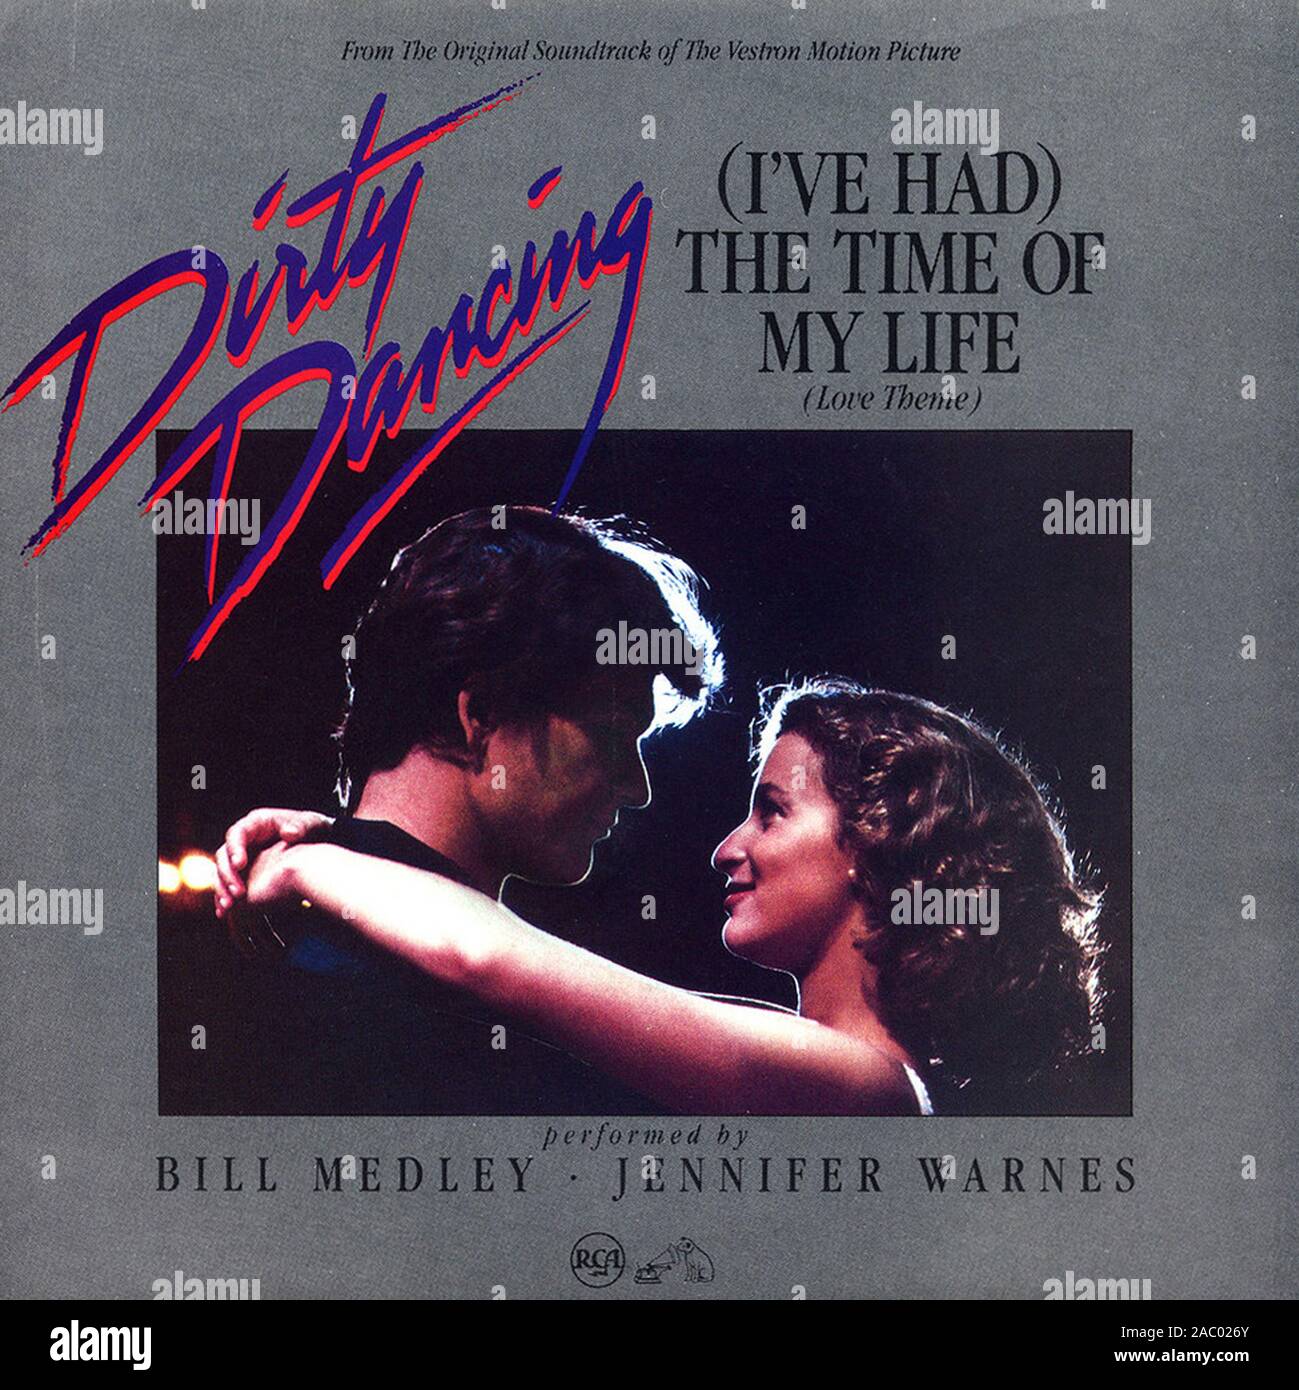 Bill Medley & Jennifer Warnes - (I've Had) The Time Of My Life - Vintage vinyl album cover Stock Photo